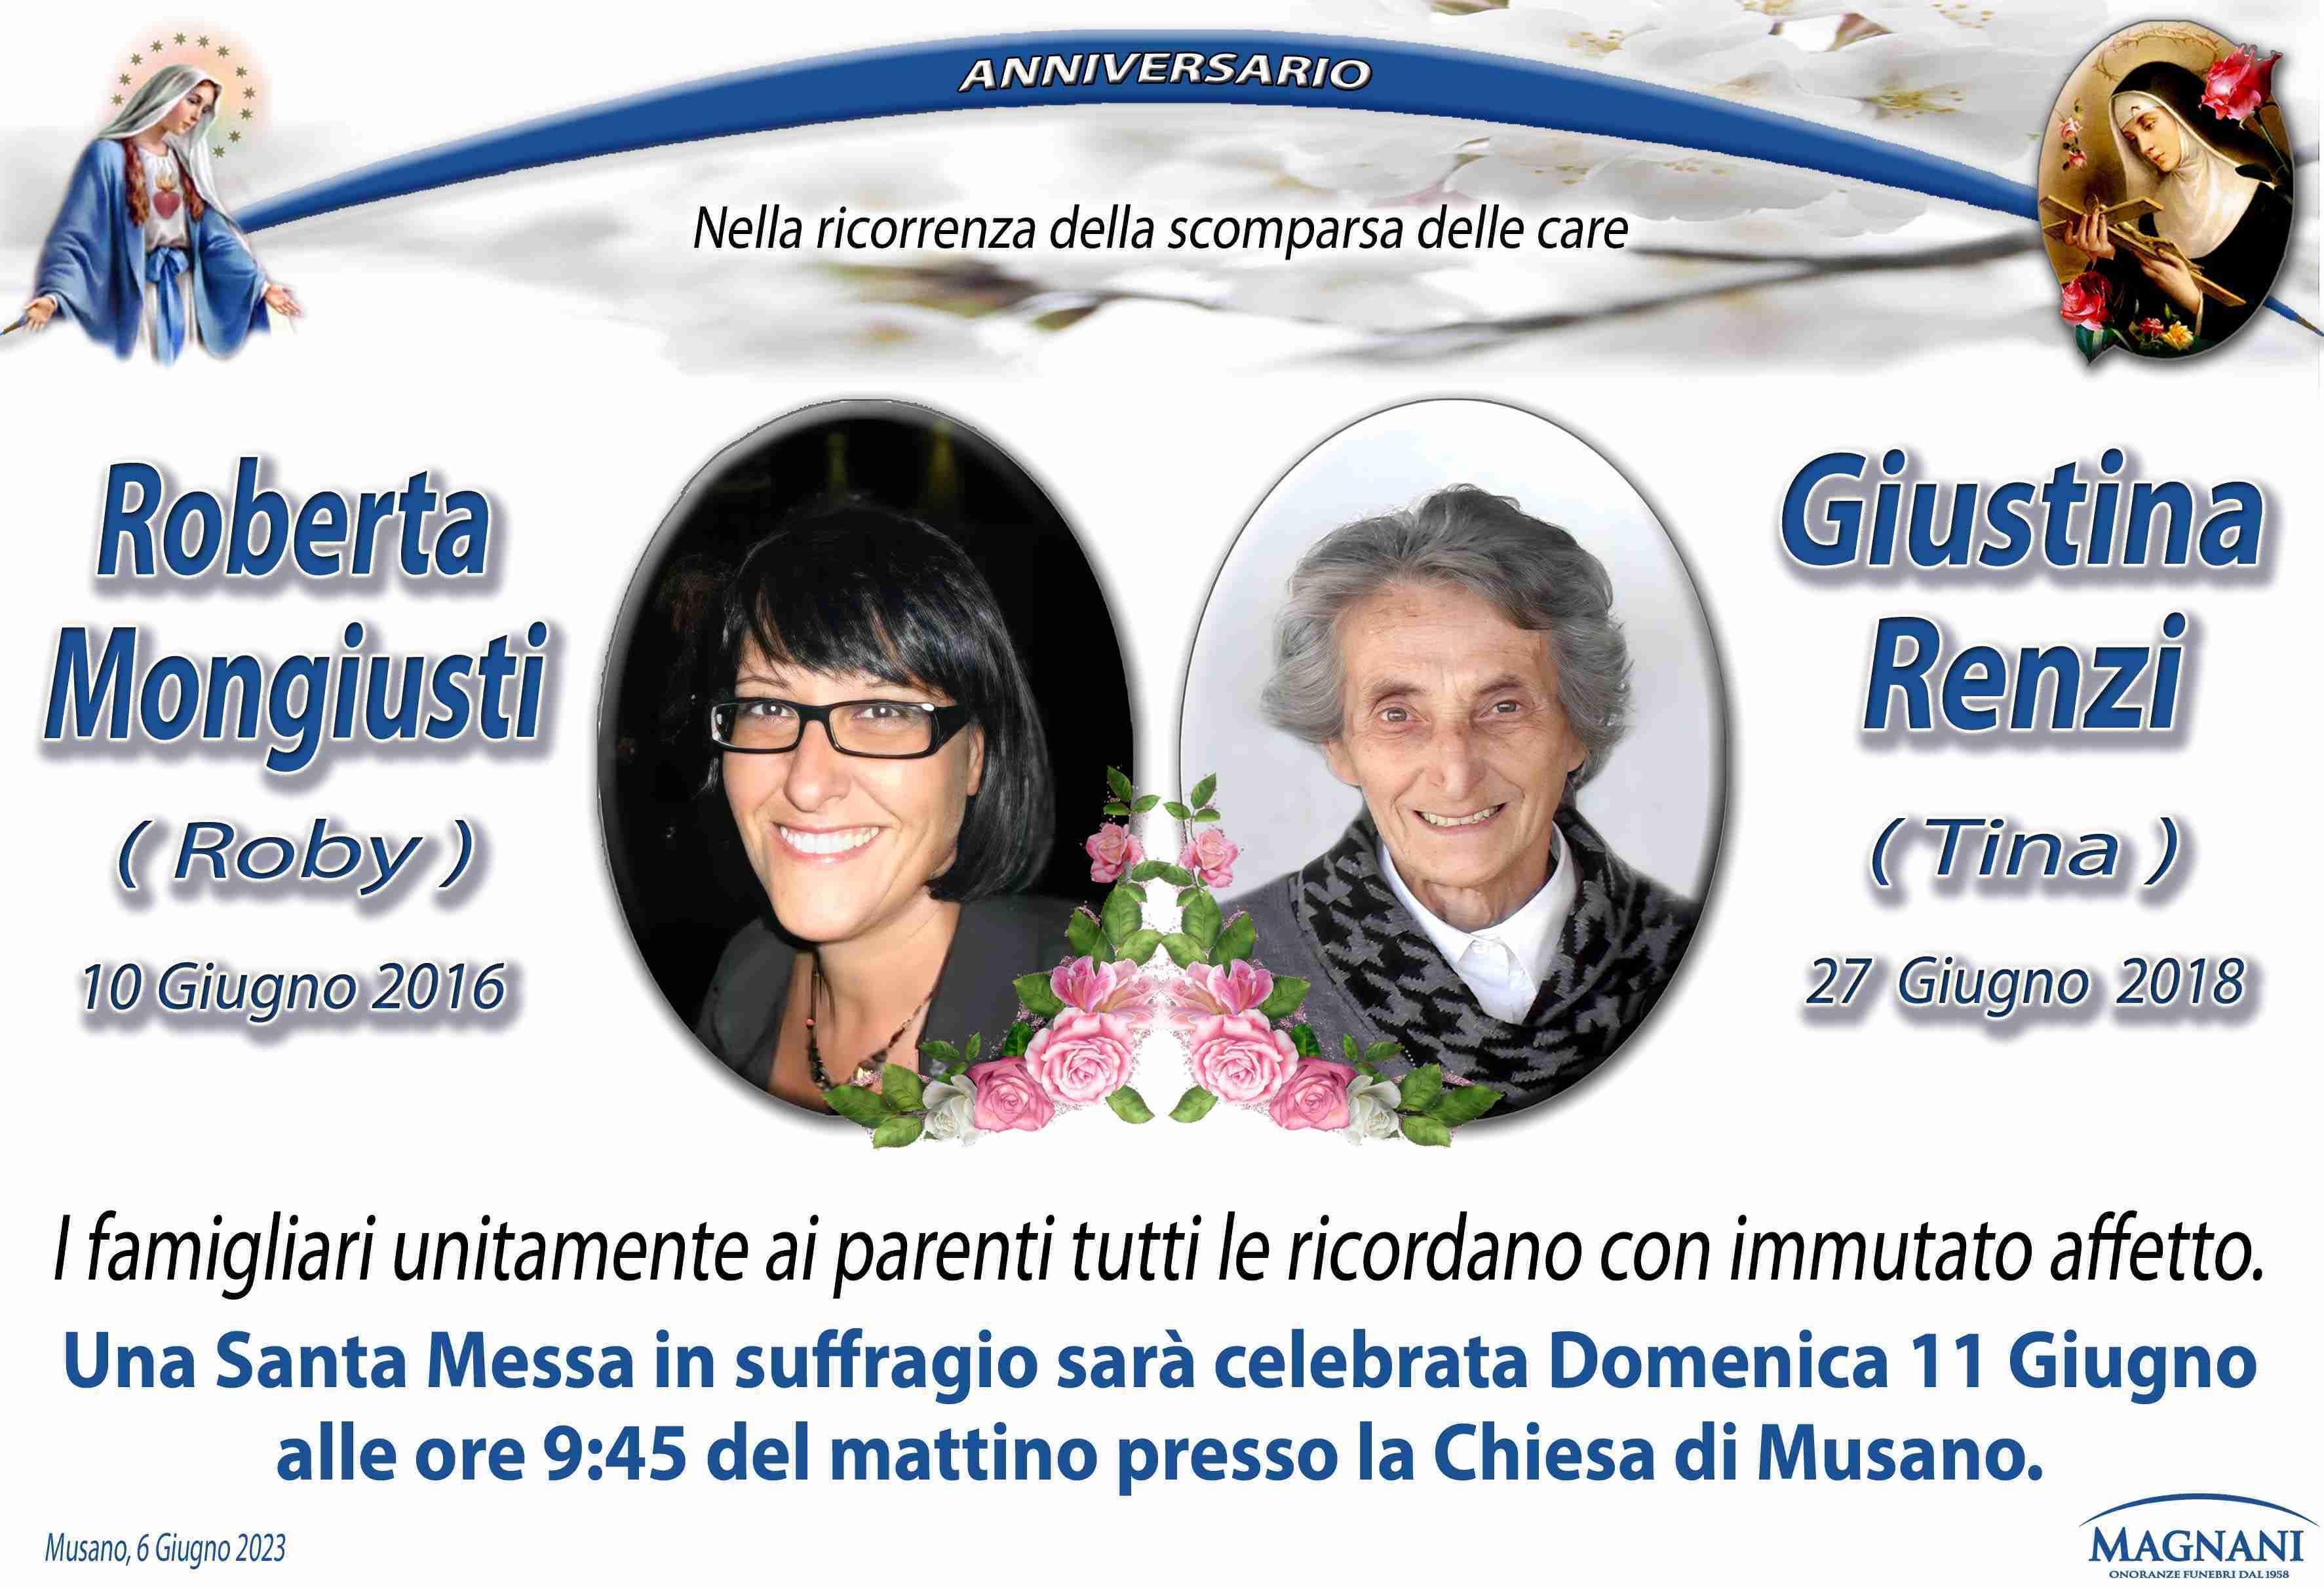 Roberta Mongiusti e Giustina Renzi